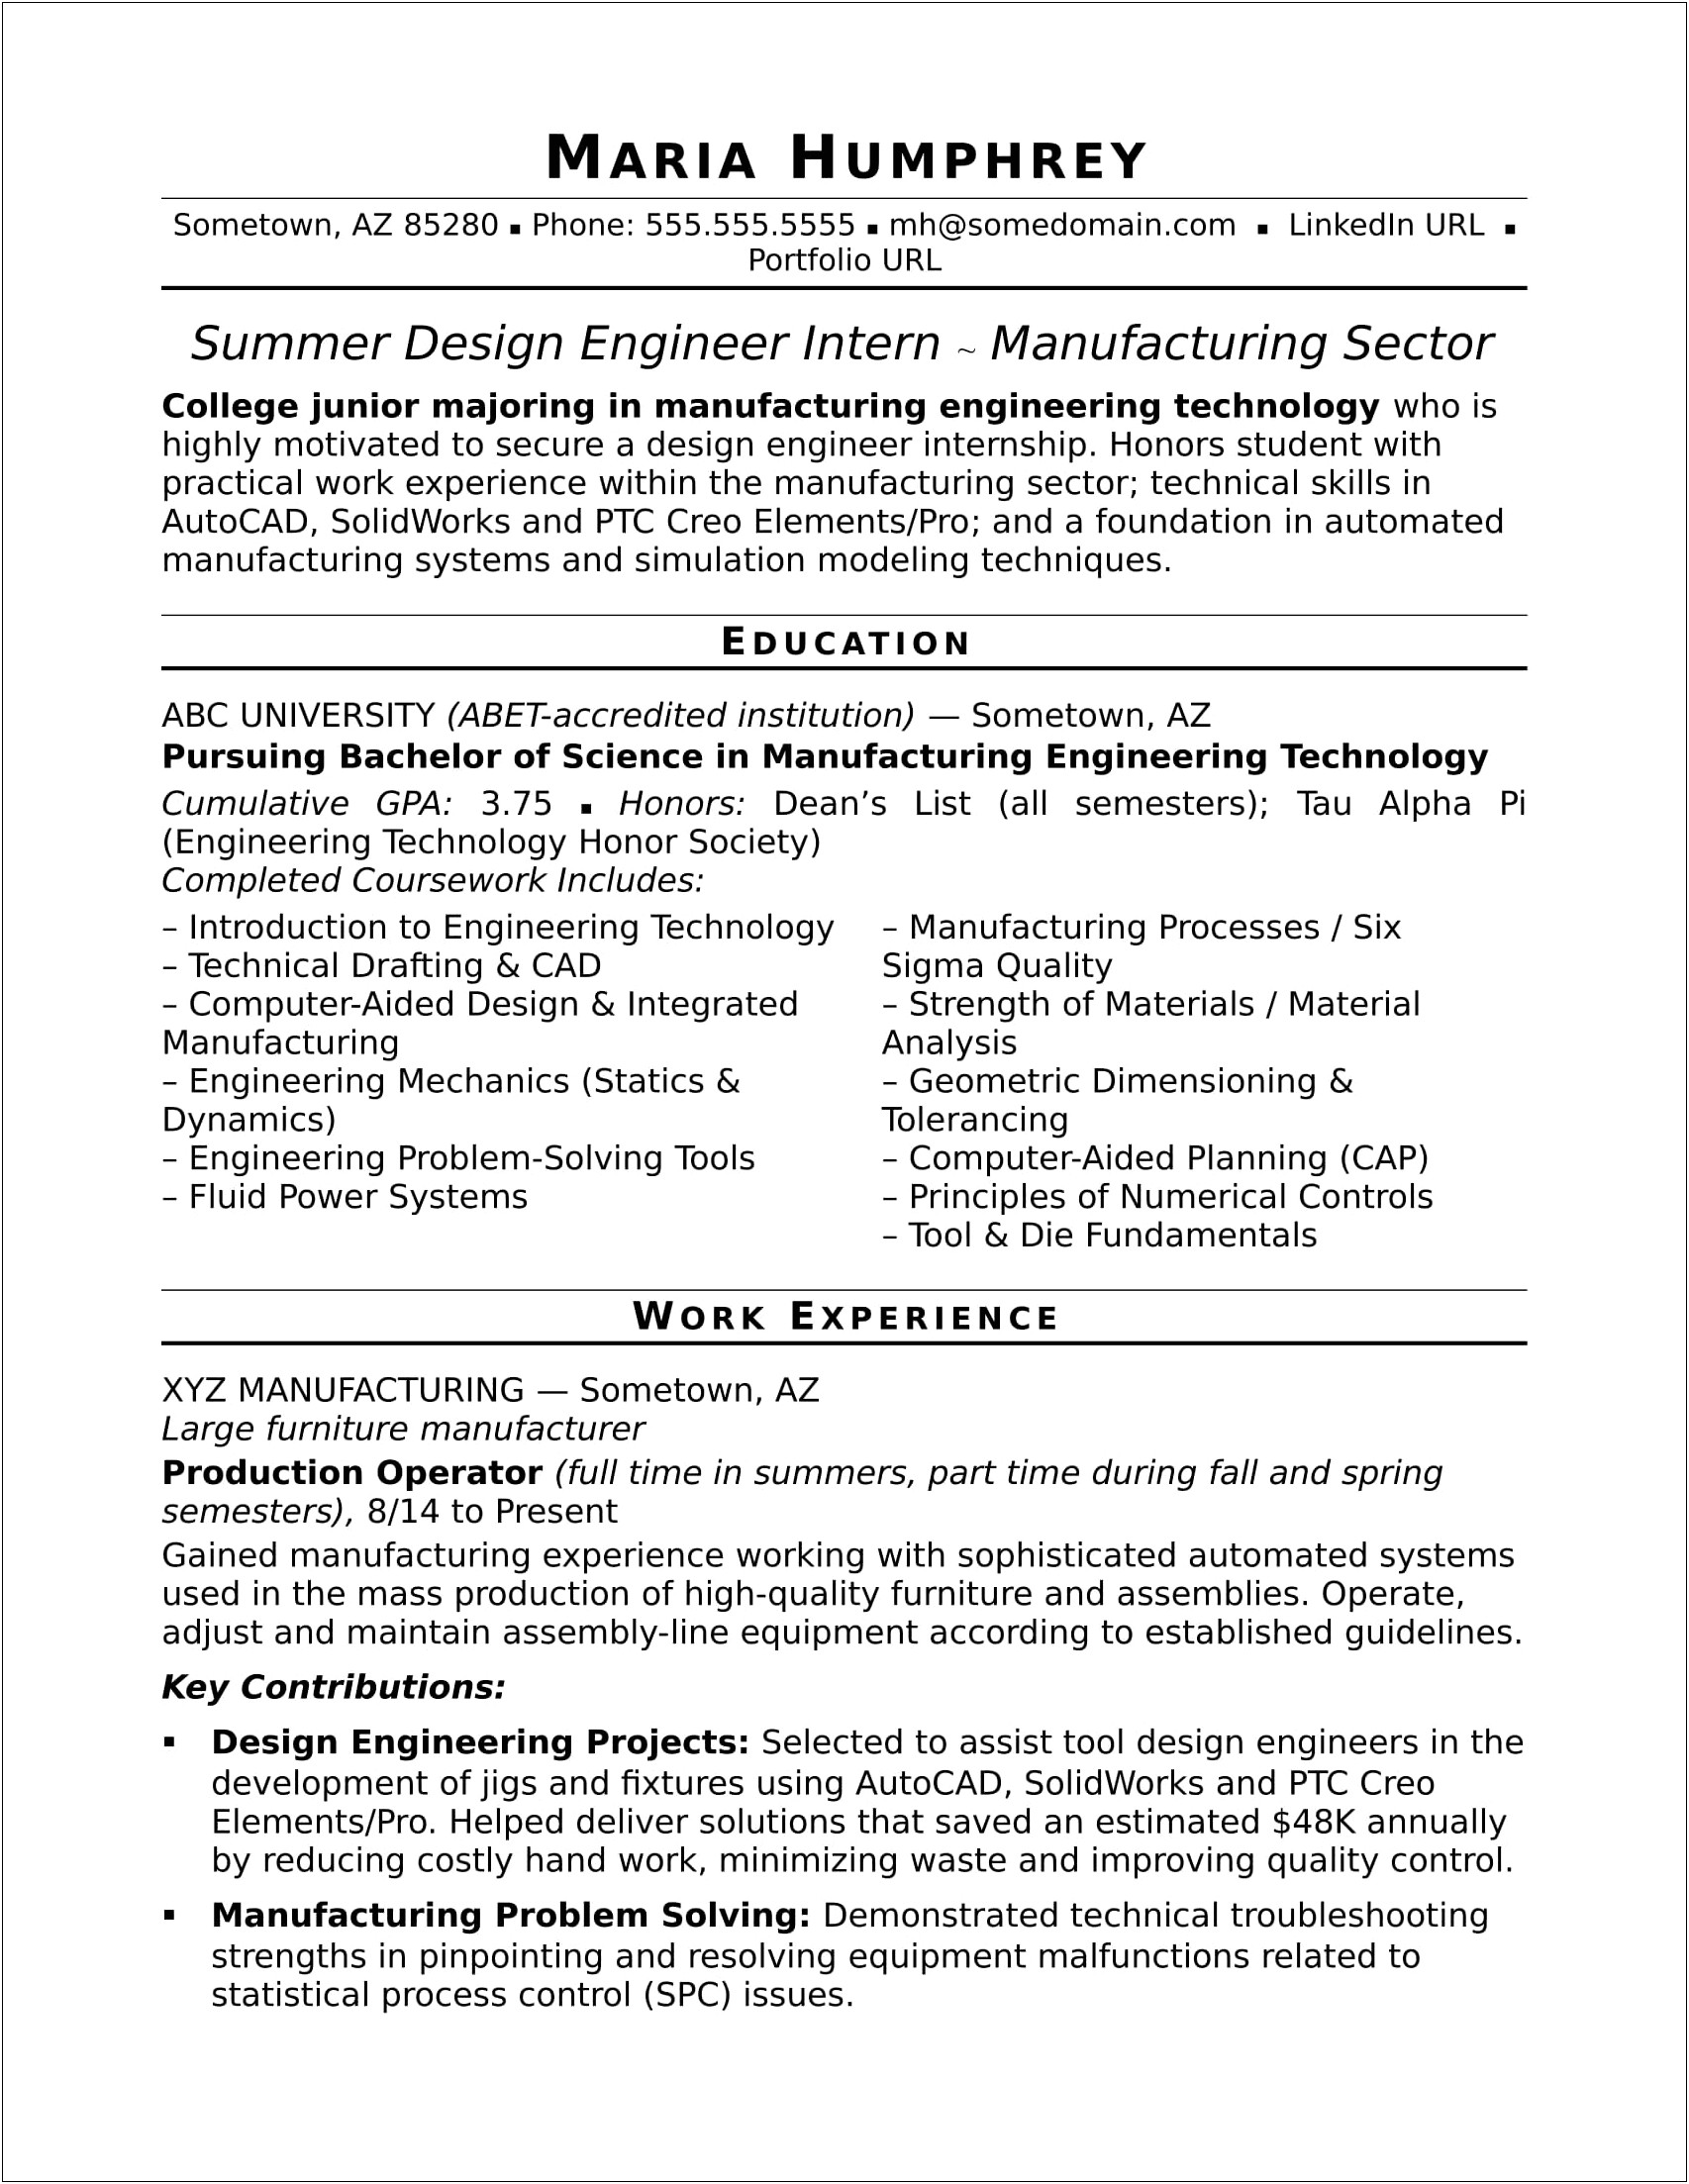 Sample Resume For Engineer Internship